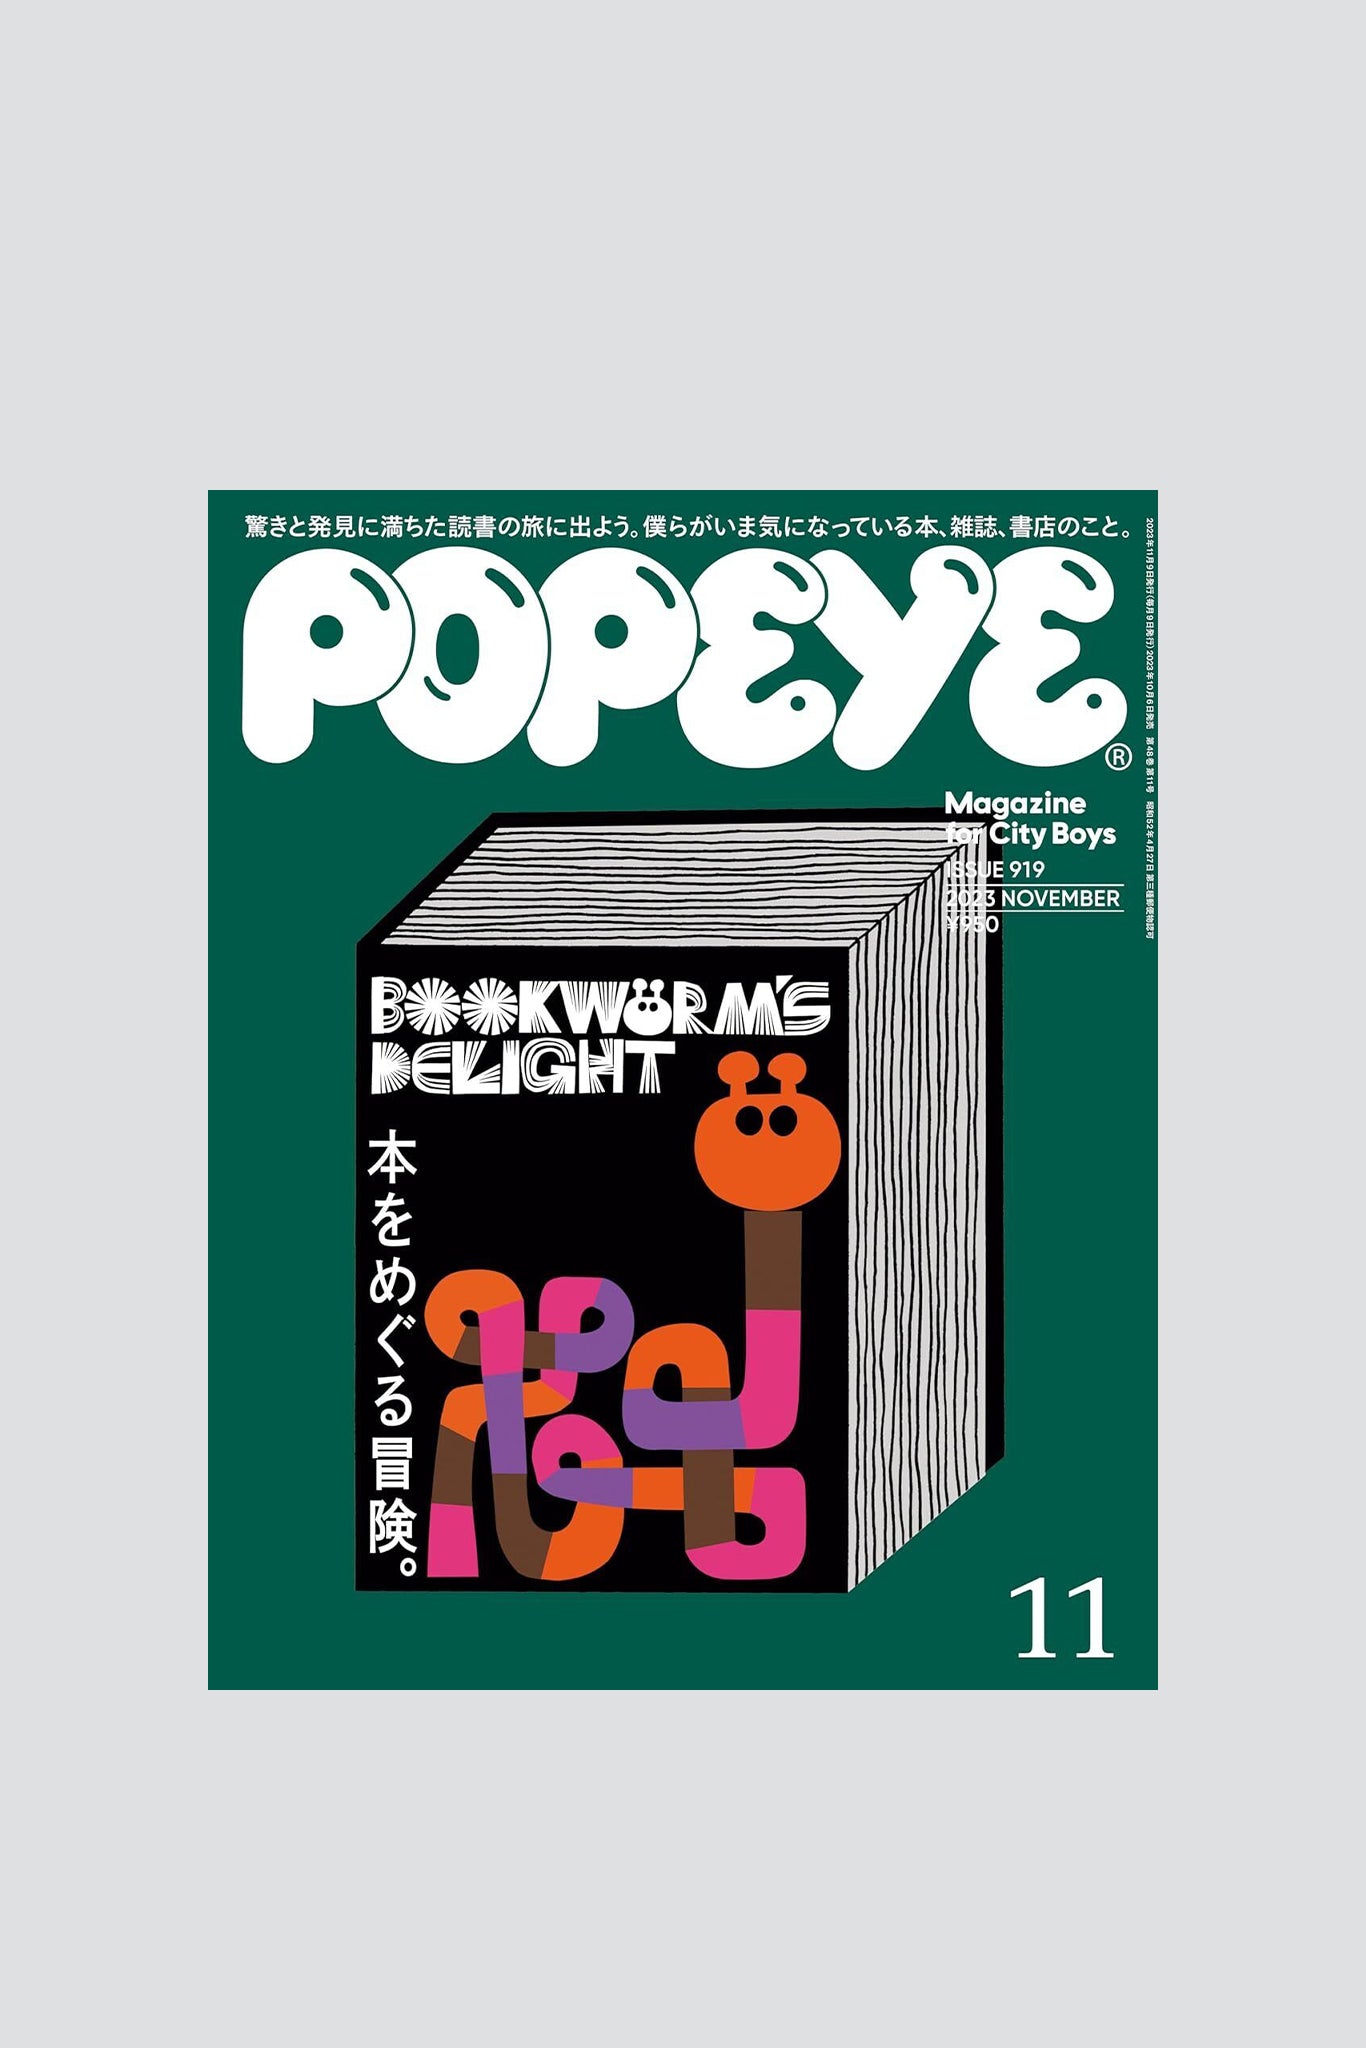 Popeye - Issue 919